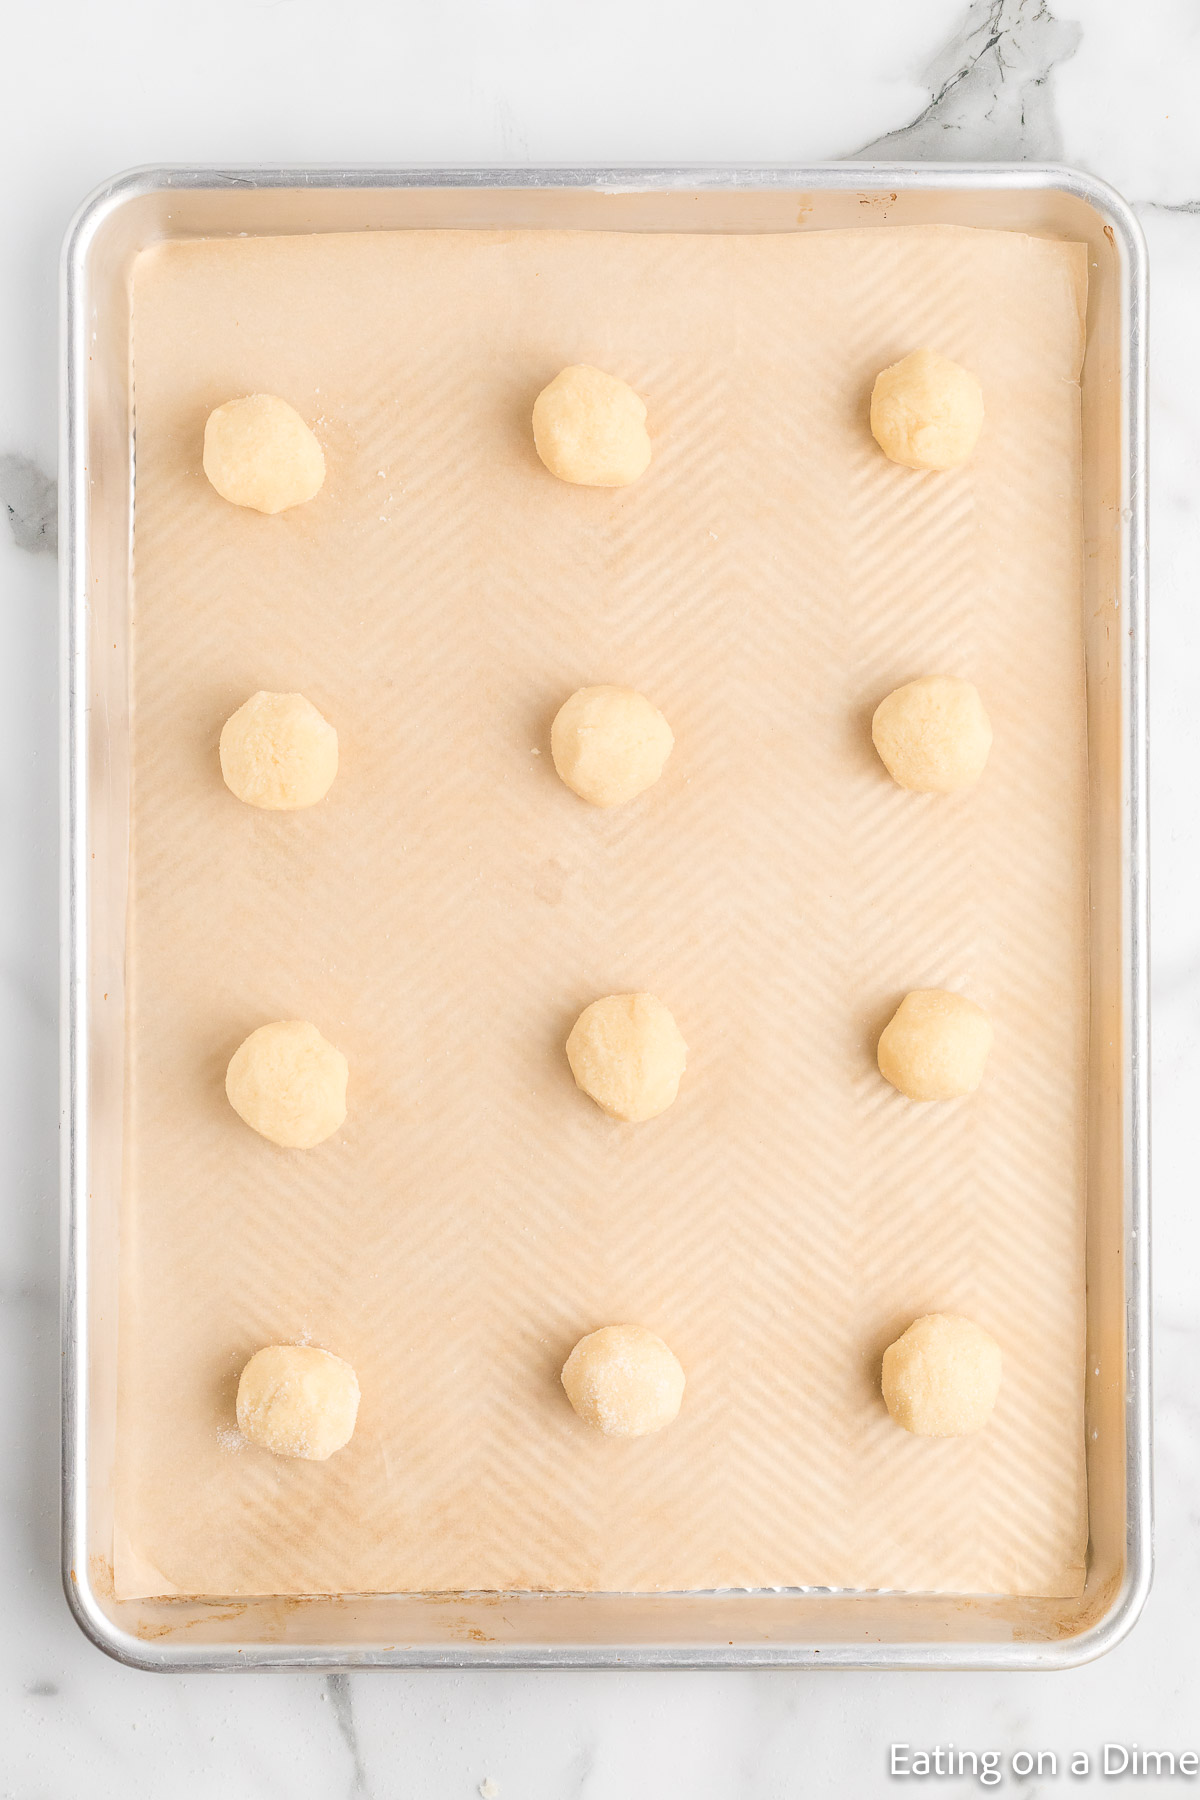 Sugar Cookie Dough balls on a baking sheet